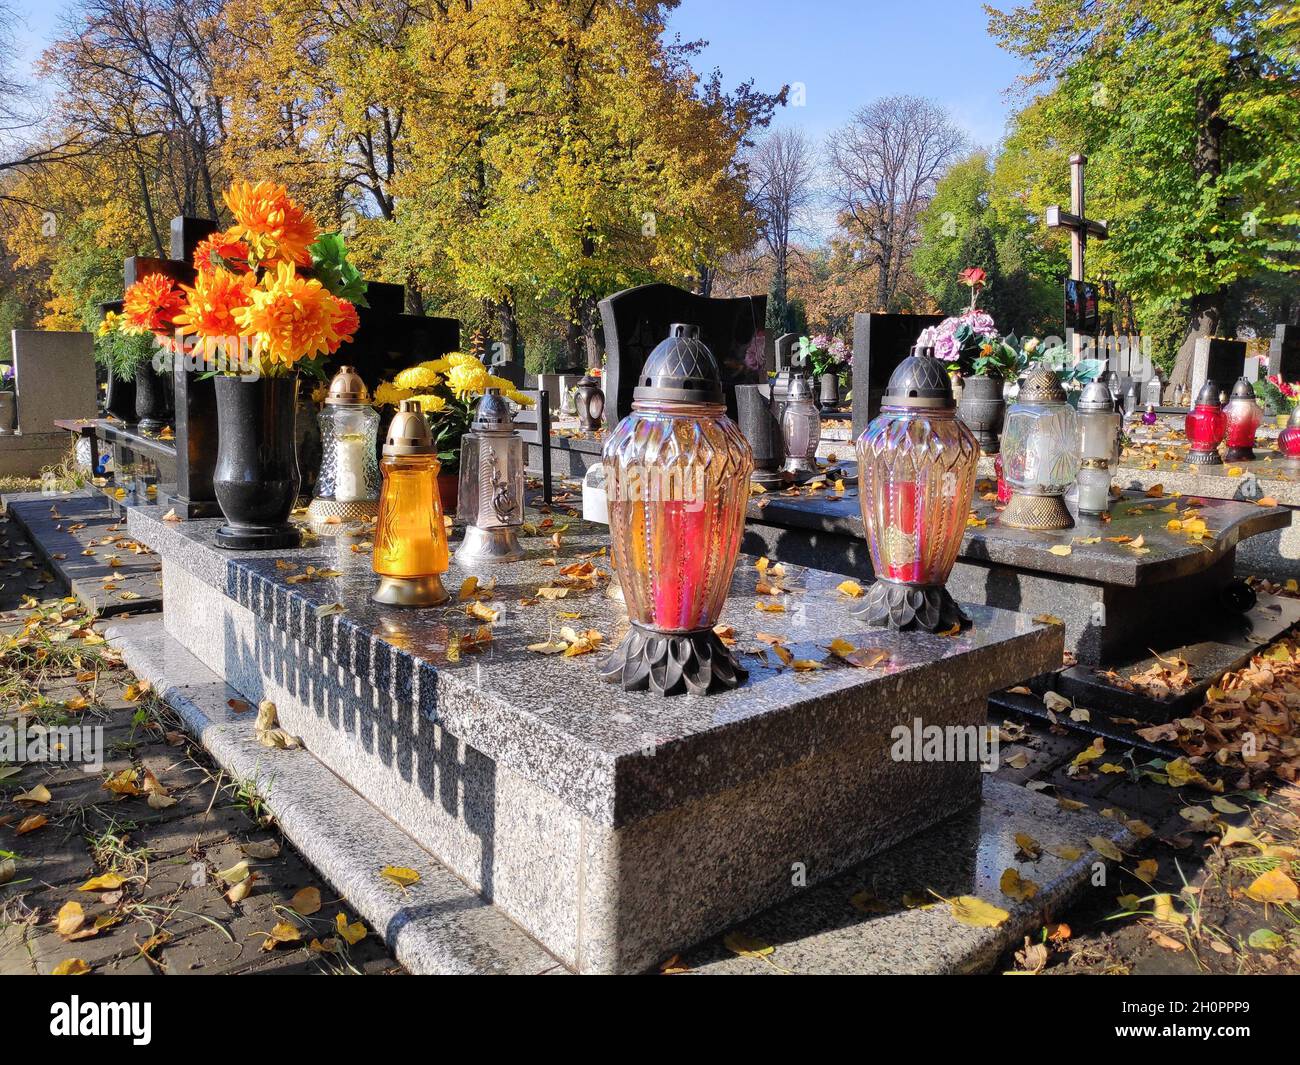 Friedhofskerzen (znicz) in Polen. Tradition zum Allerheiligen. Stockfoto